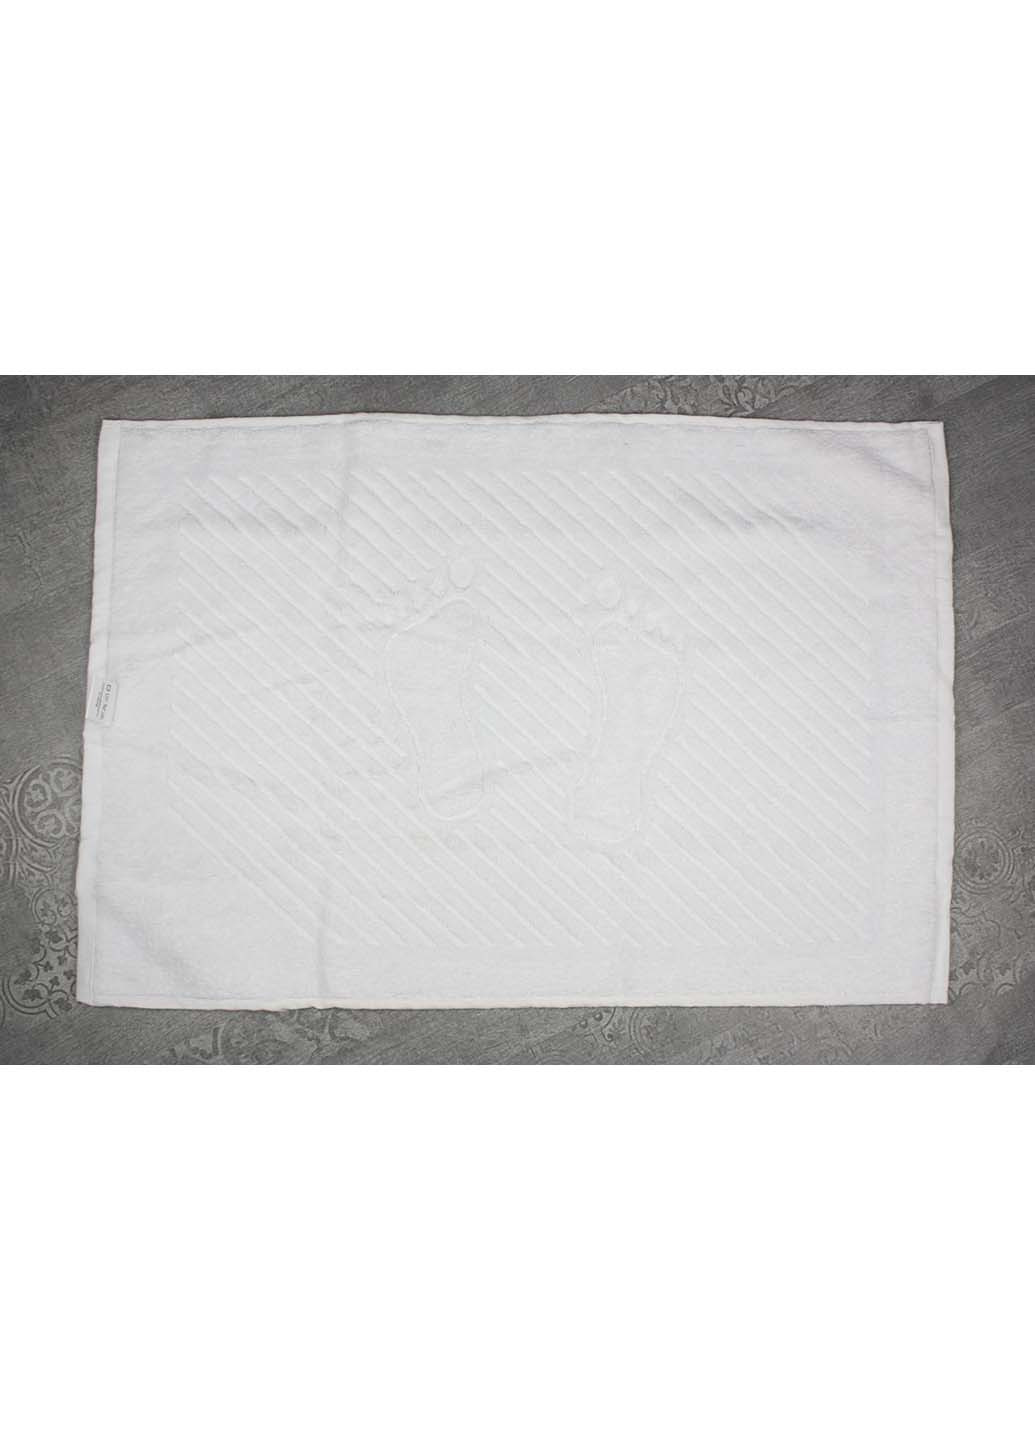 Еней-Плюс полотенце махровое для ног аш0027 50х70 белый производство - Украина